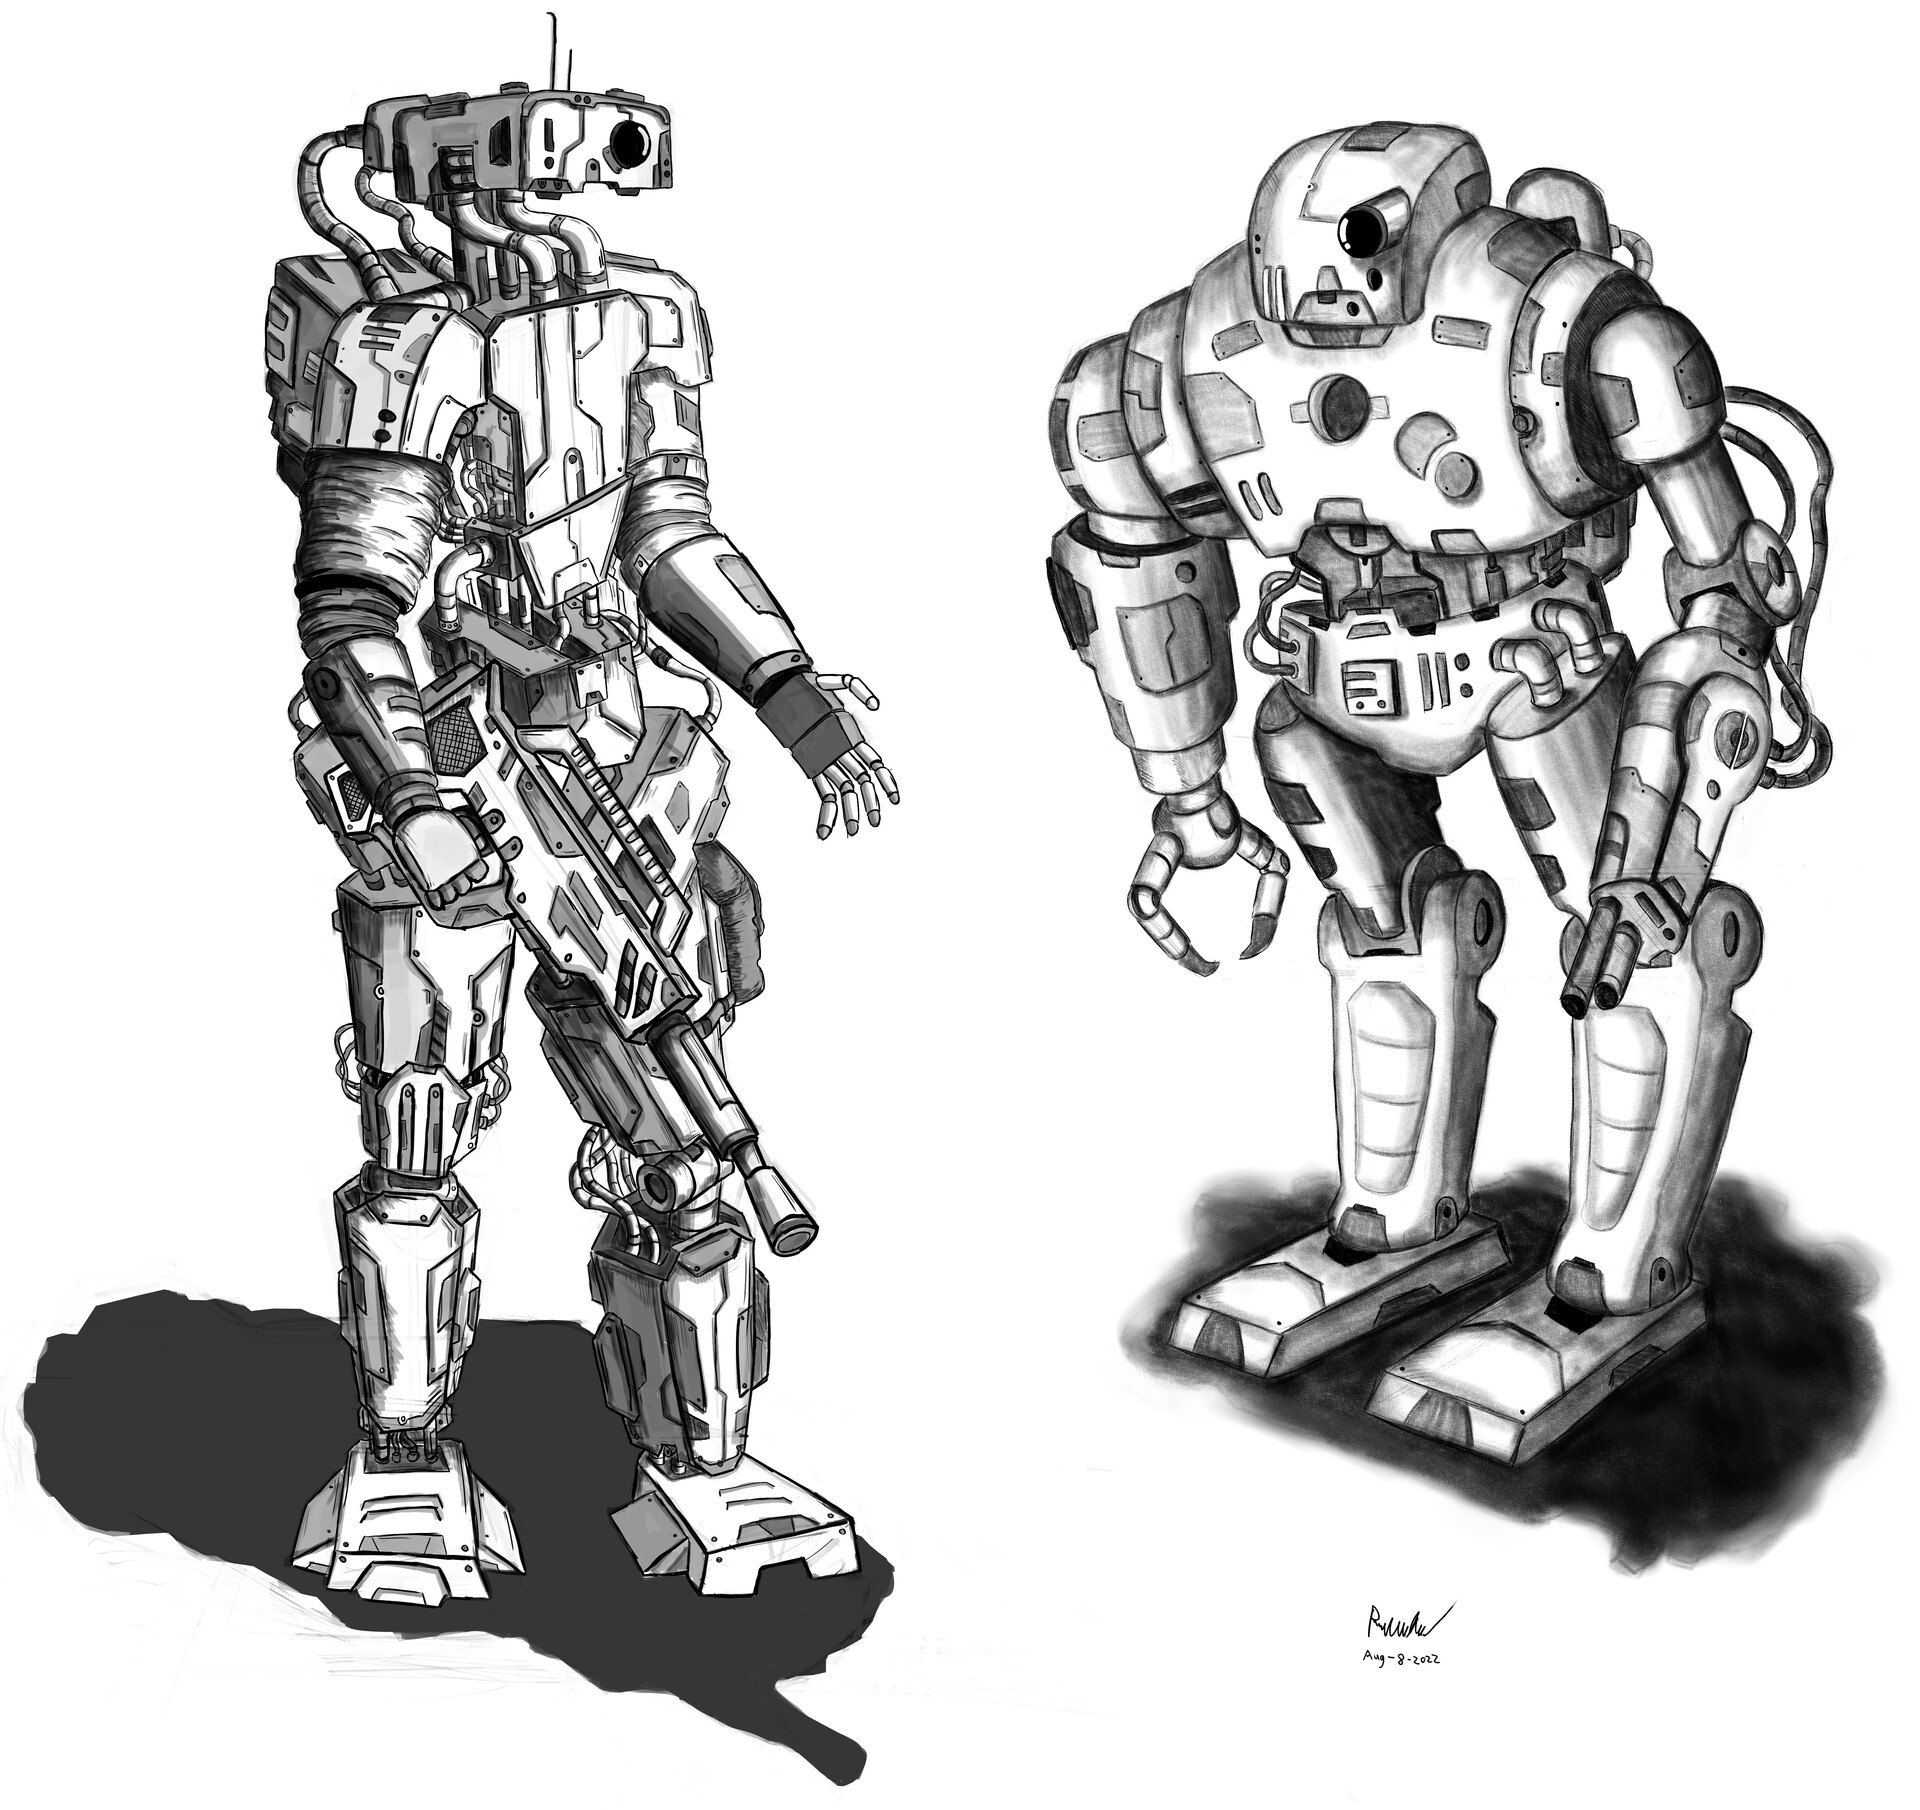 Scratch & Sketch - Robots